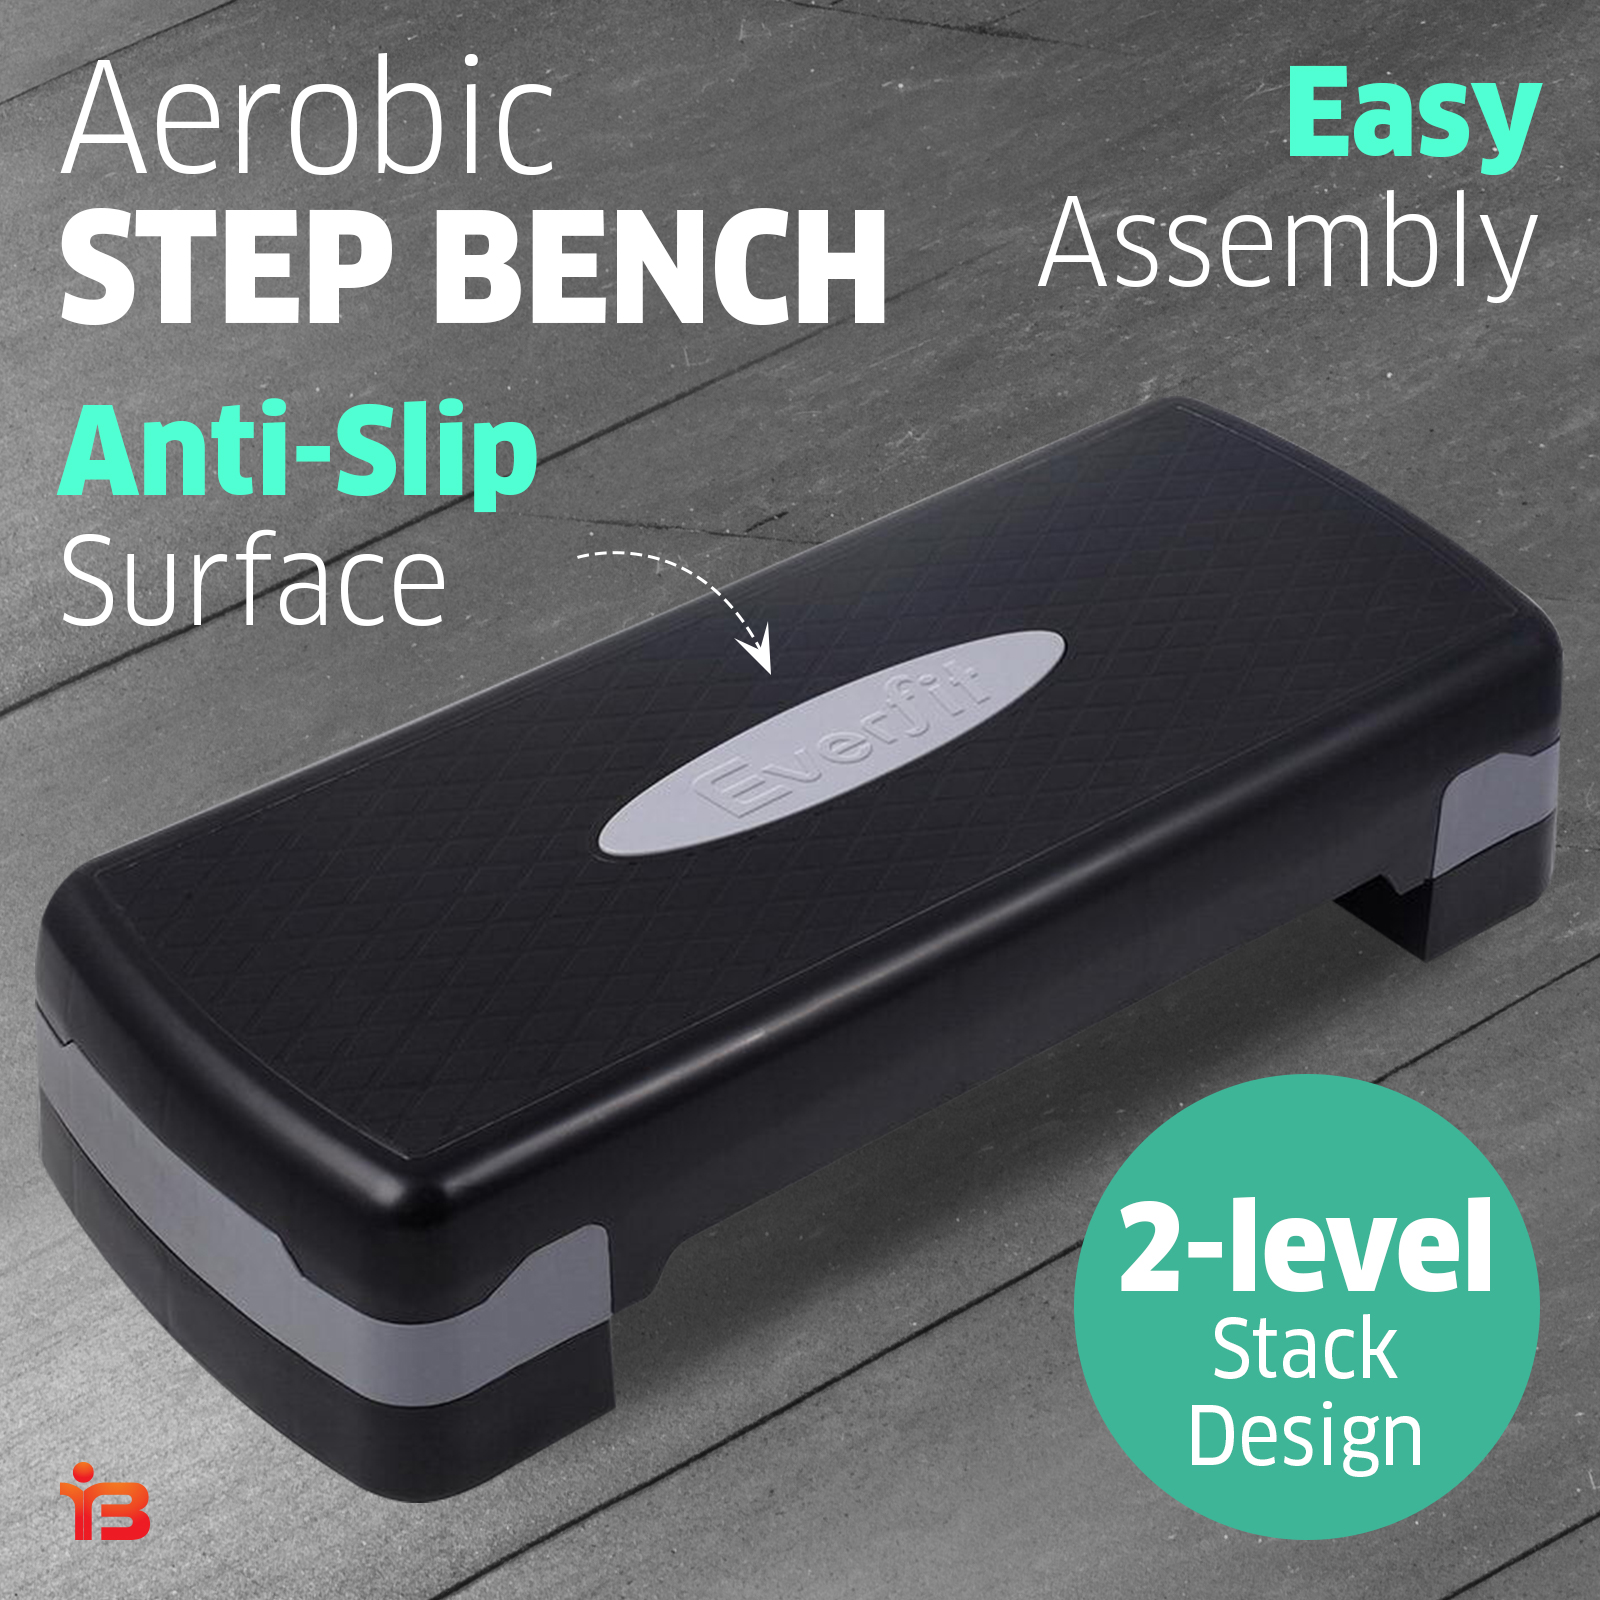 Everfit 2 Level Block Aerobic Step Bench Workout Stepping Platform